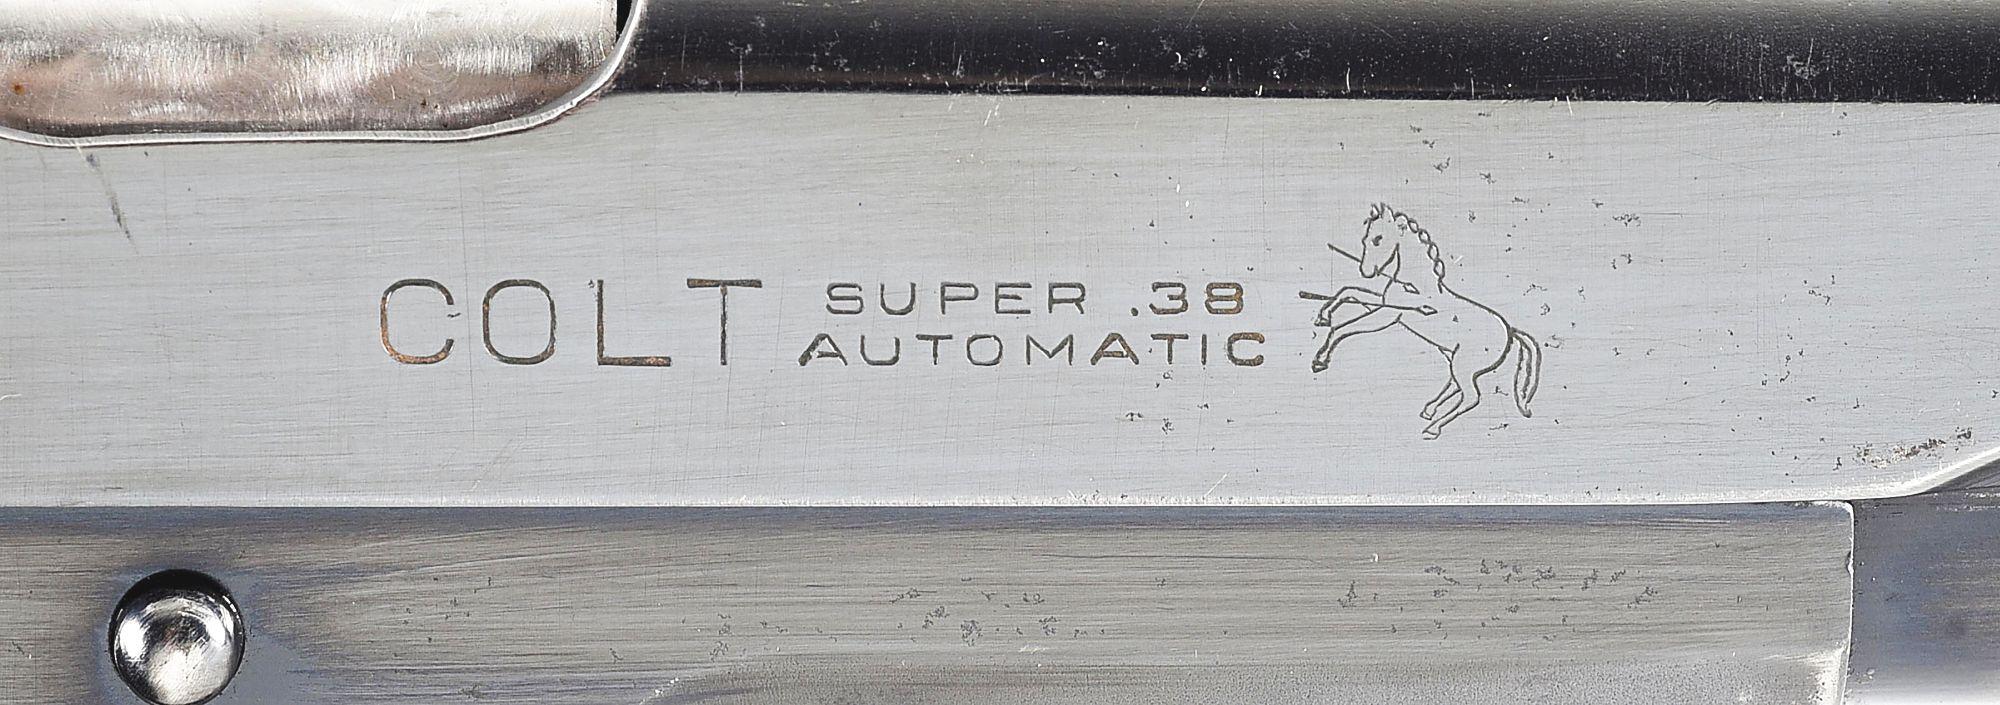 (C) COLT SUPER .38 SEMI-AUTOMATIC .38 SUPER PISTOL.